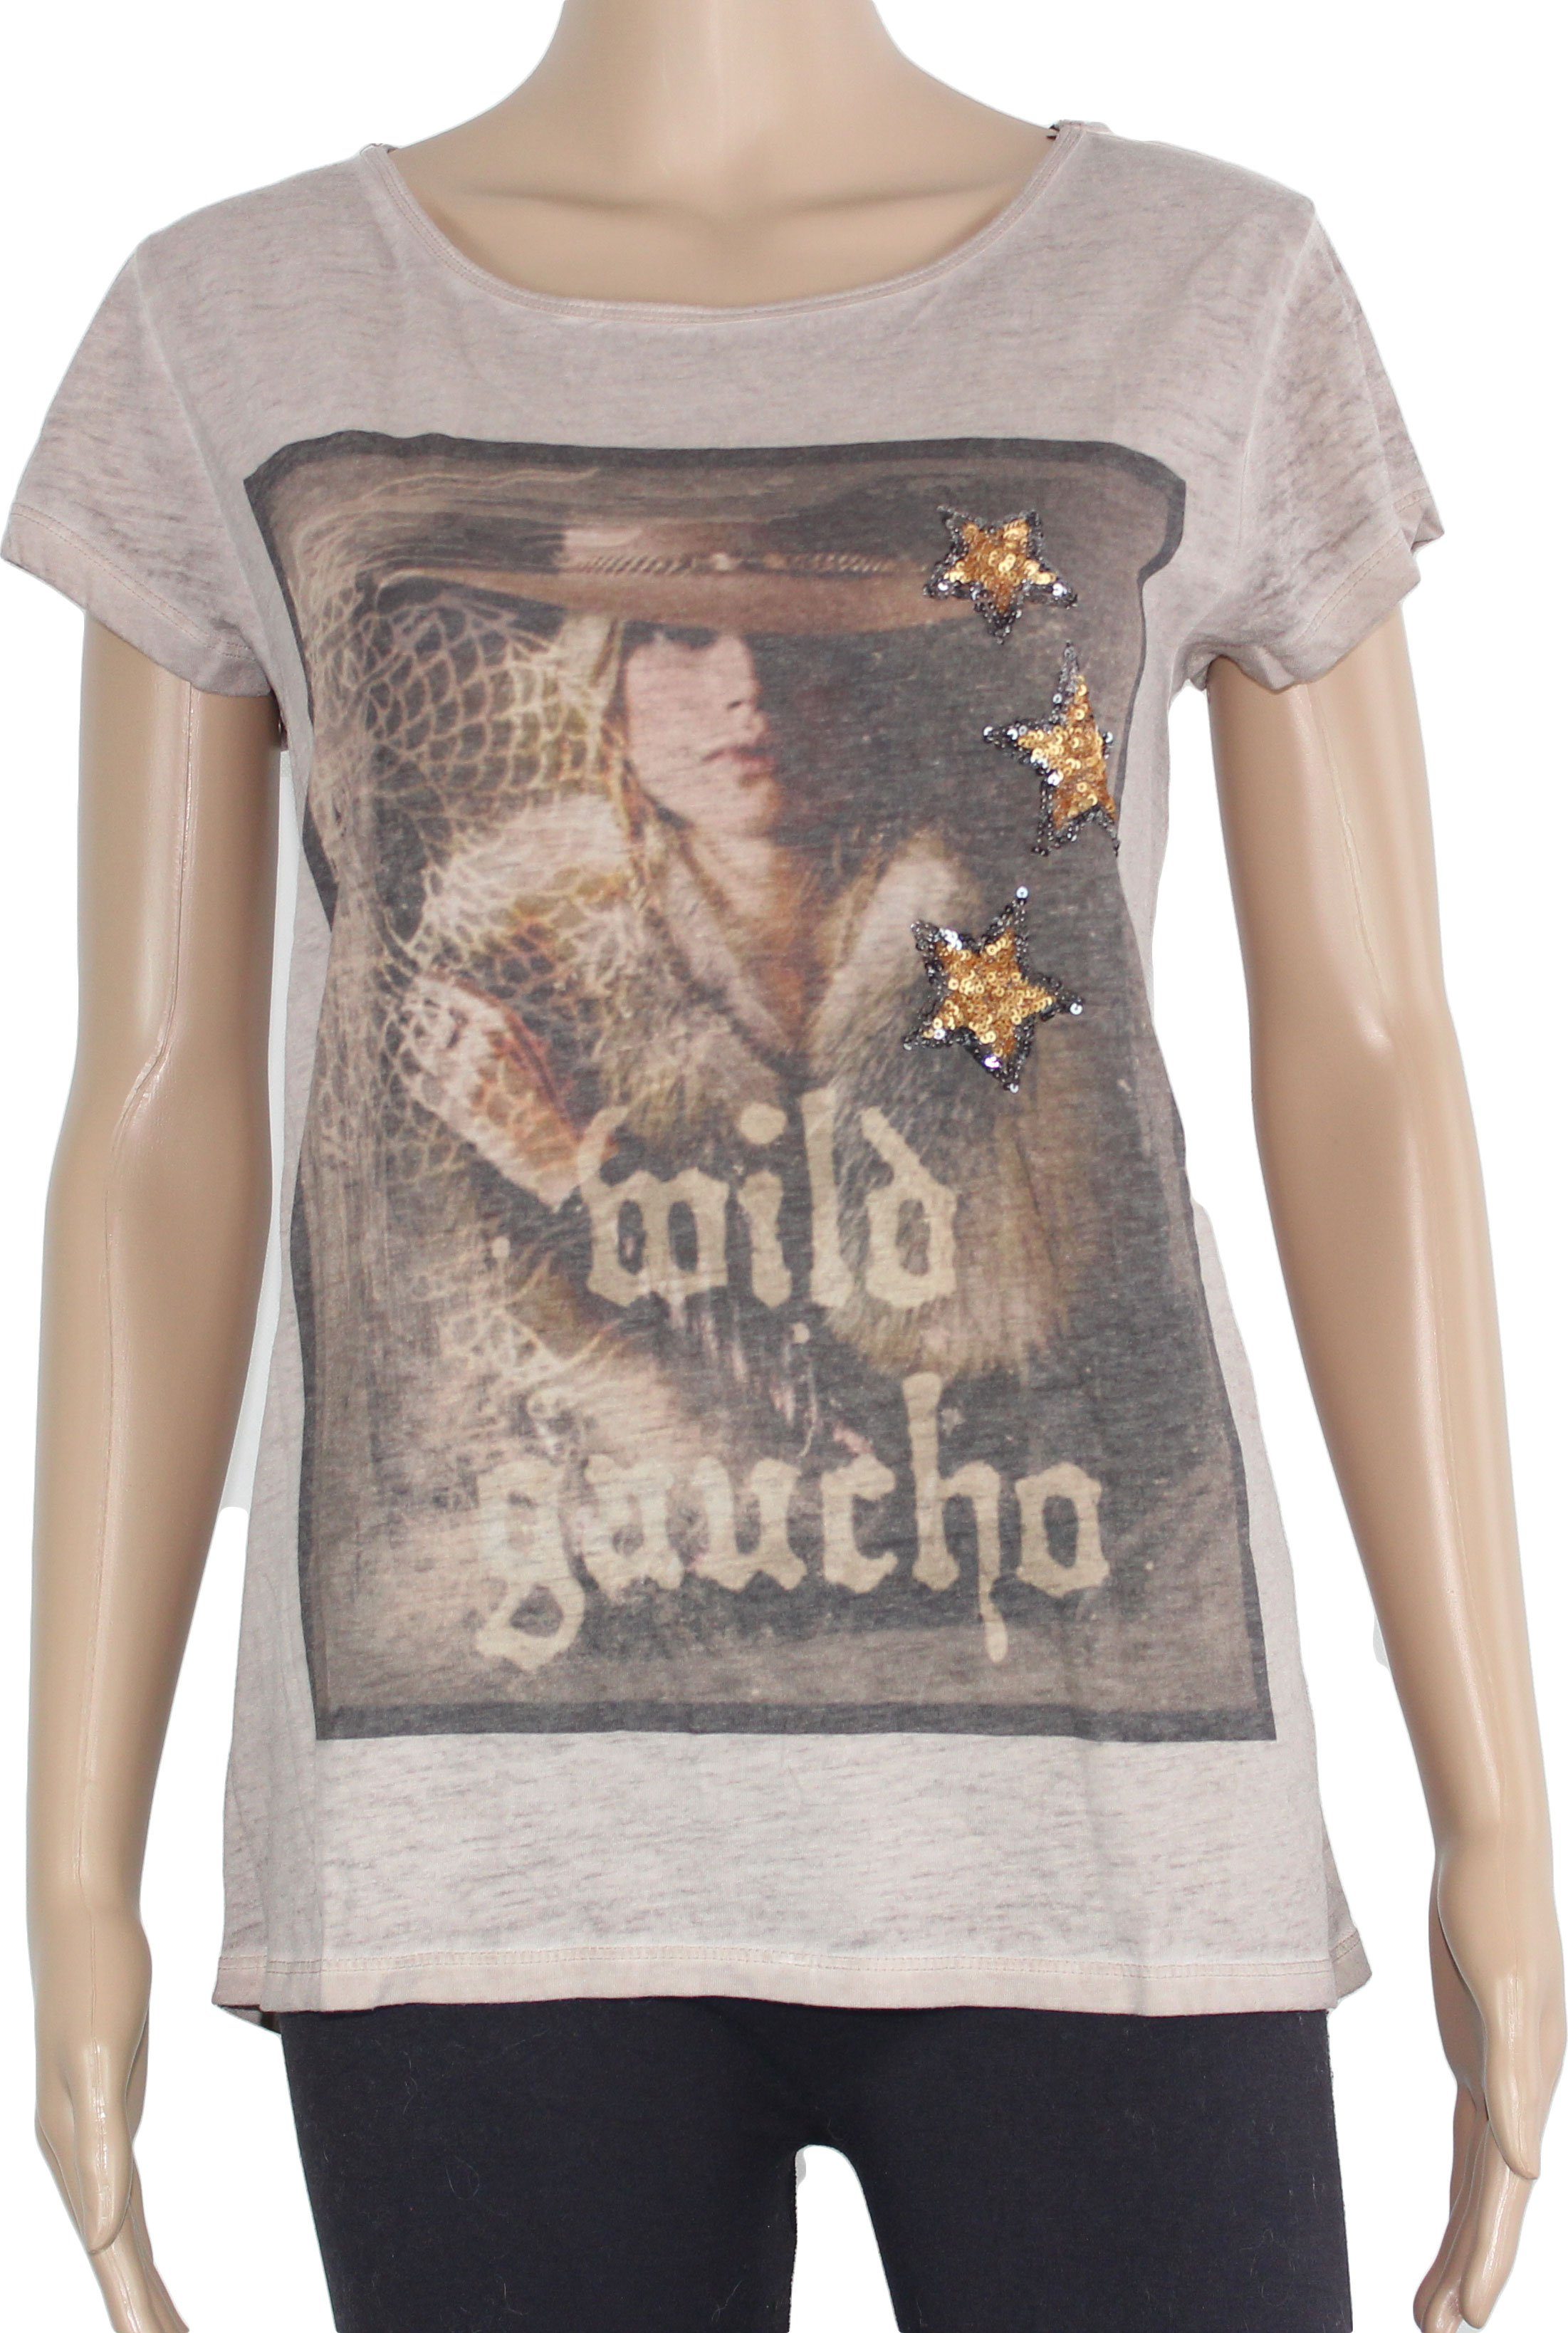 Grace Fashion T-Shirt Pailletten, Sexy Wild